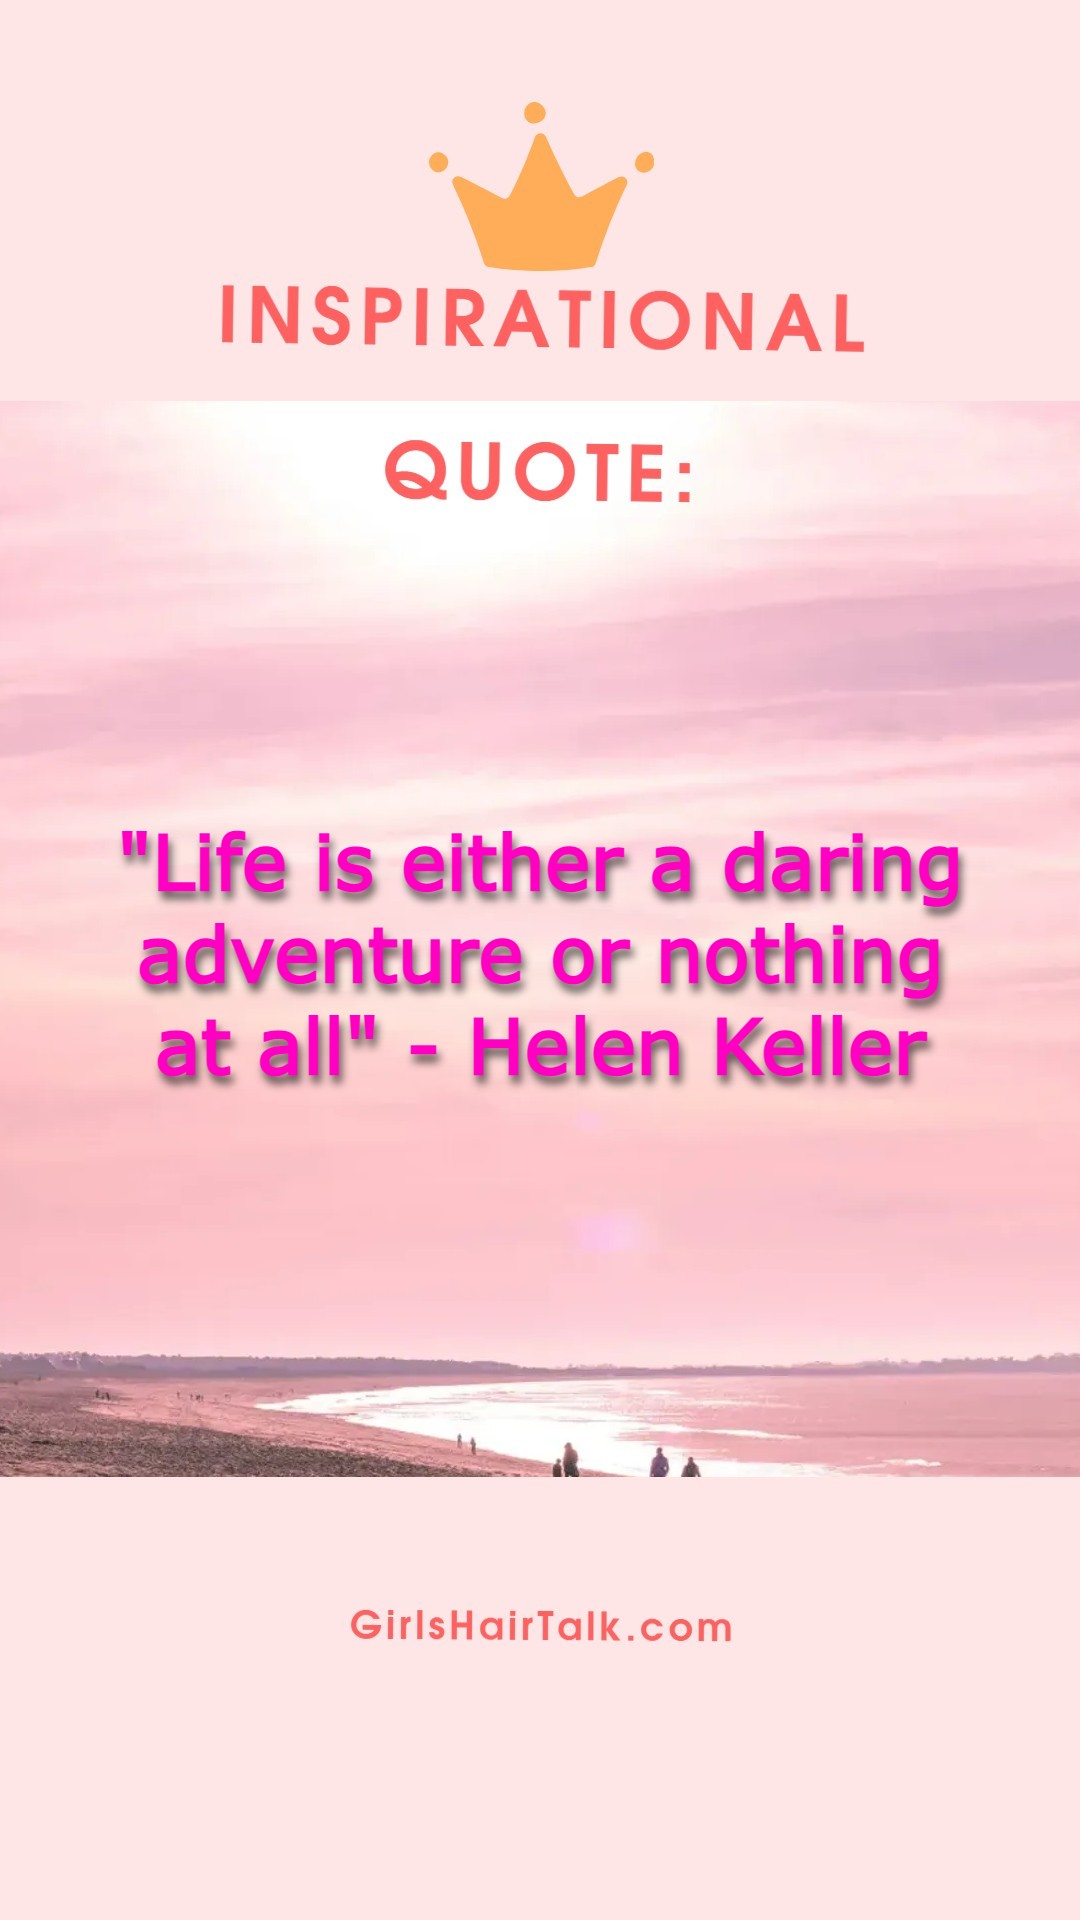 Helen Keller cancer quotes